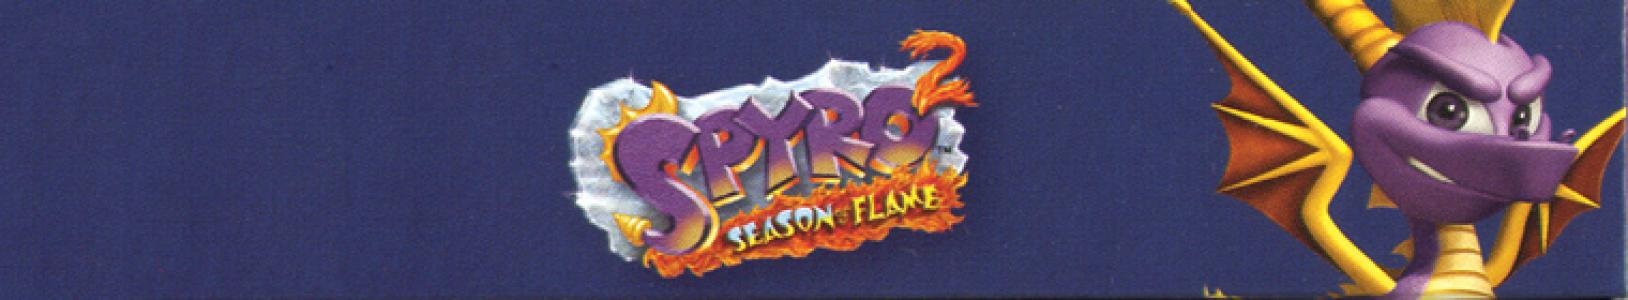 Spyro 2: Season of Flame banner